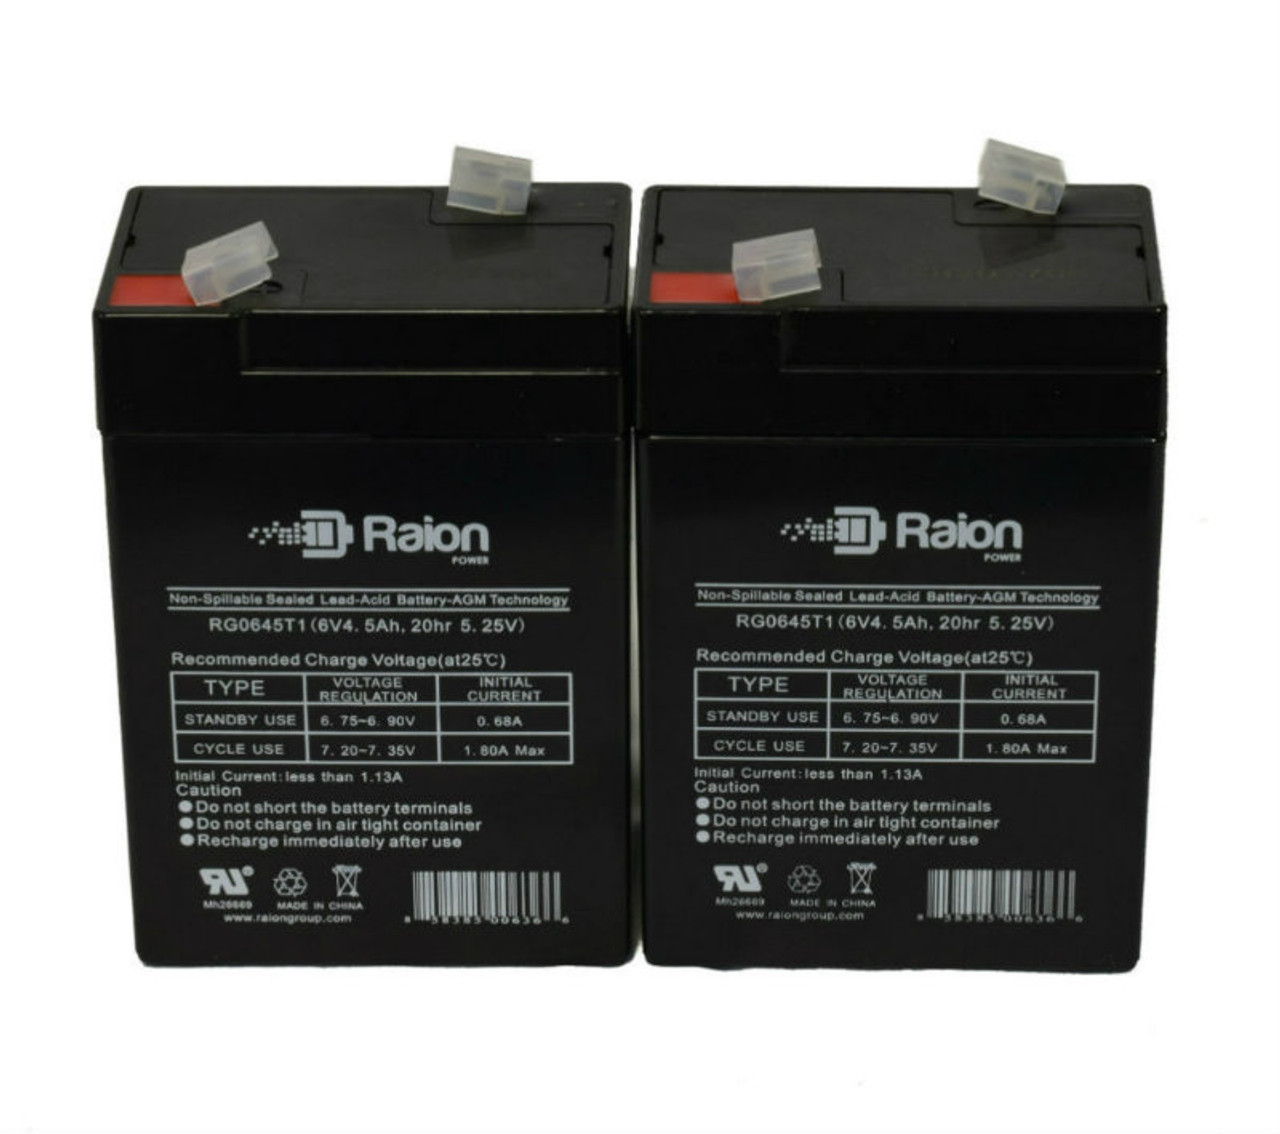 Raion Power 6V 4.5Ah Replacement Emergency Light Battery for Teledyne LASER - 2 Pack